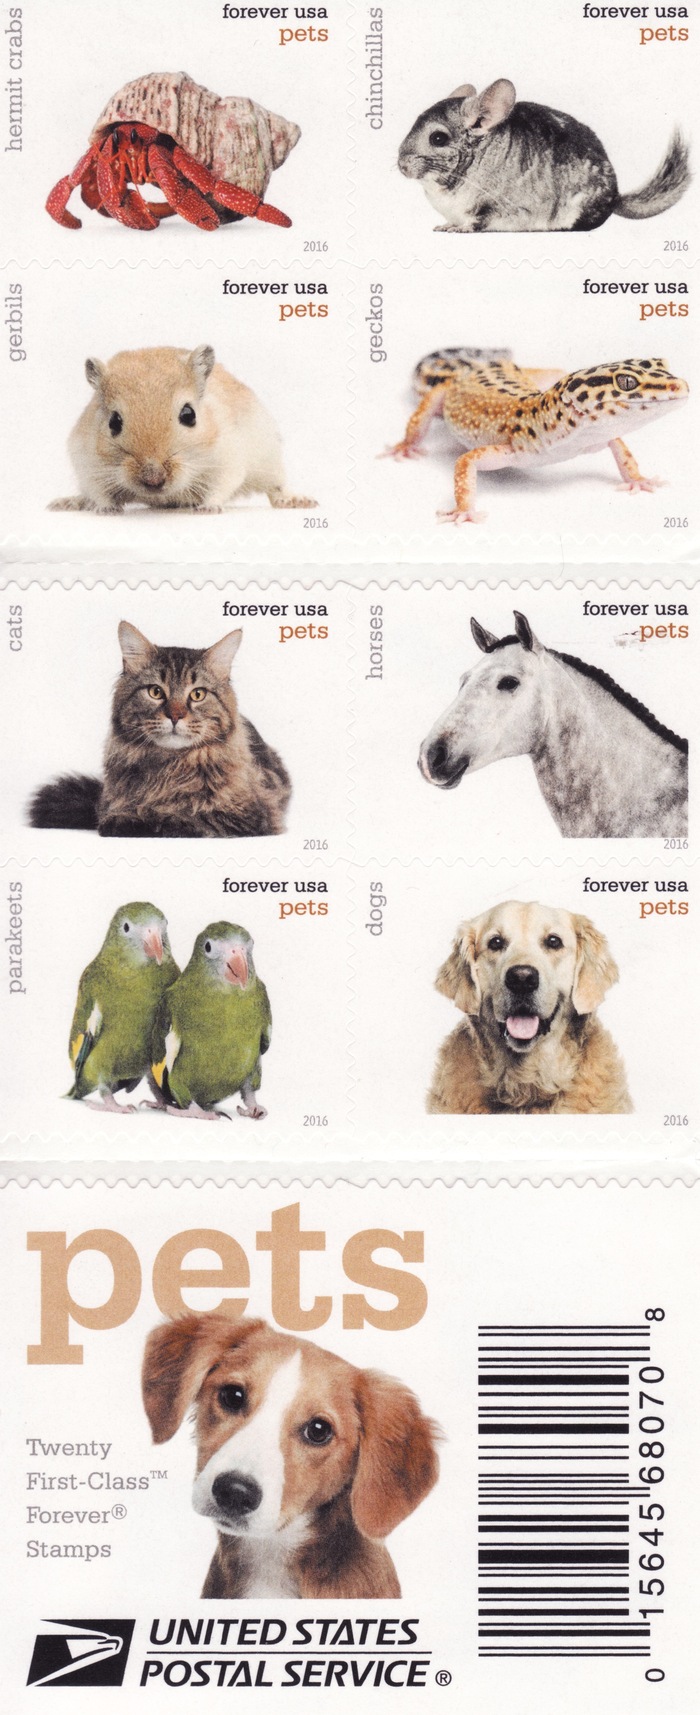 USPS “Pets” postage stamps 1